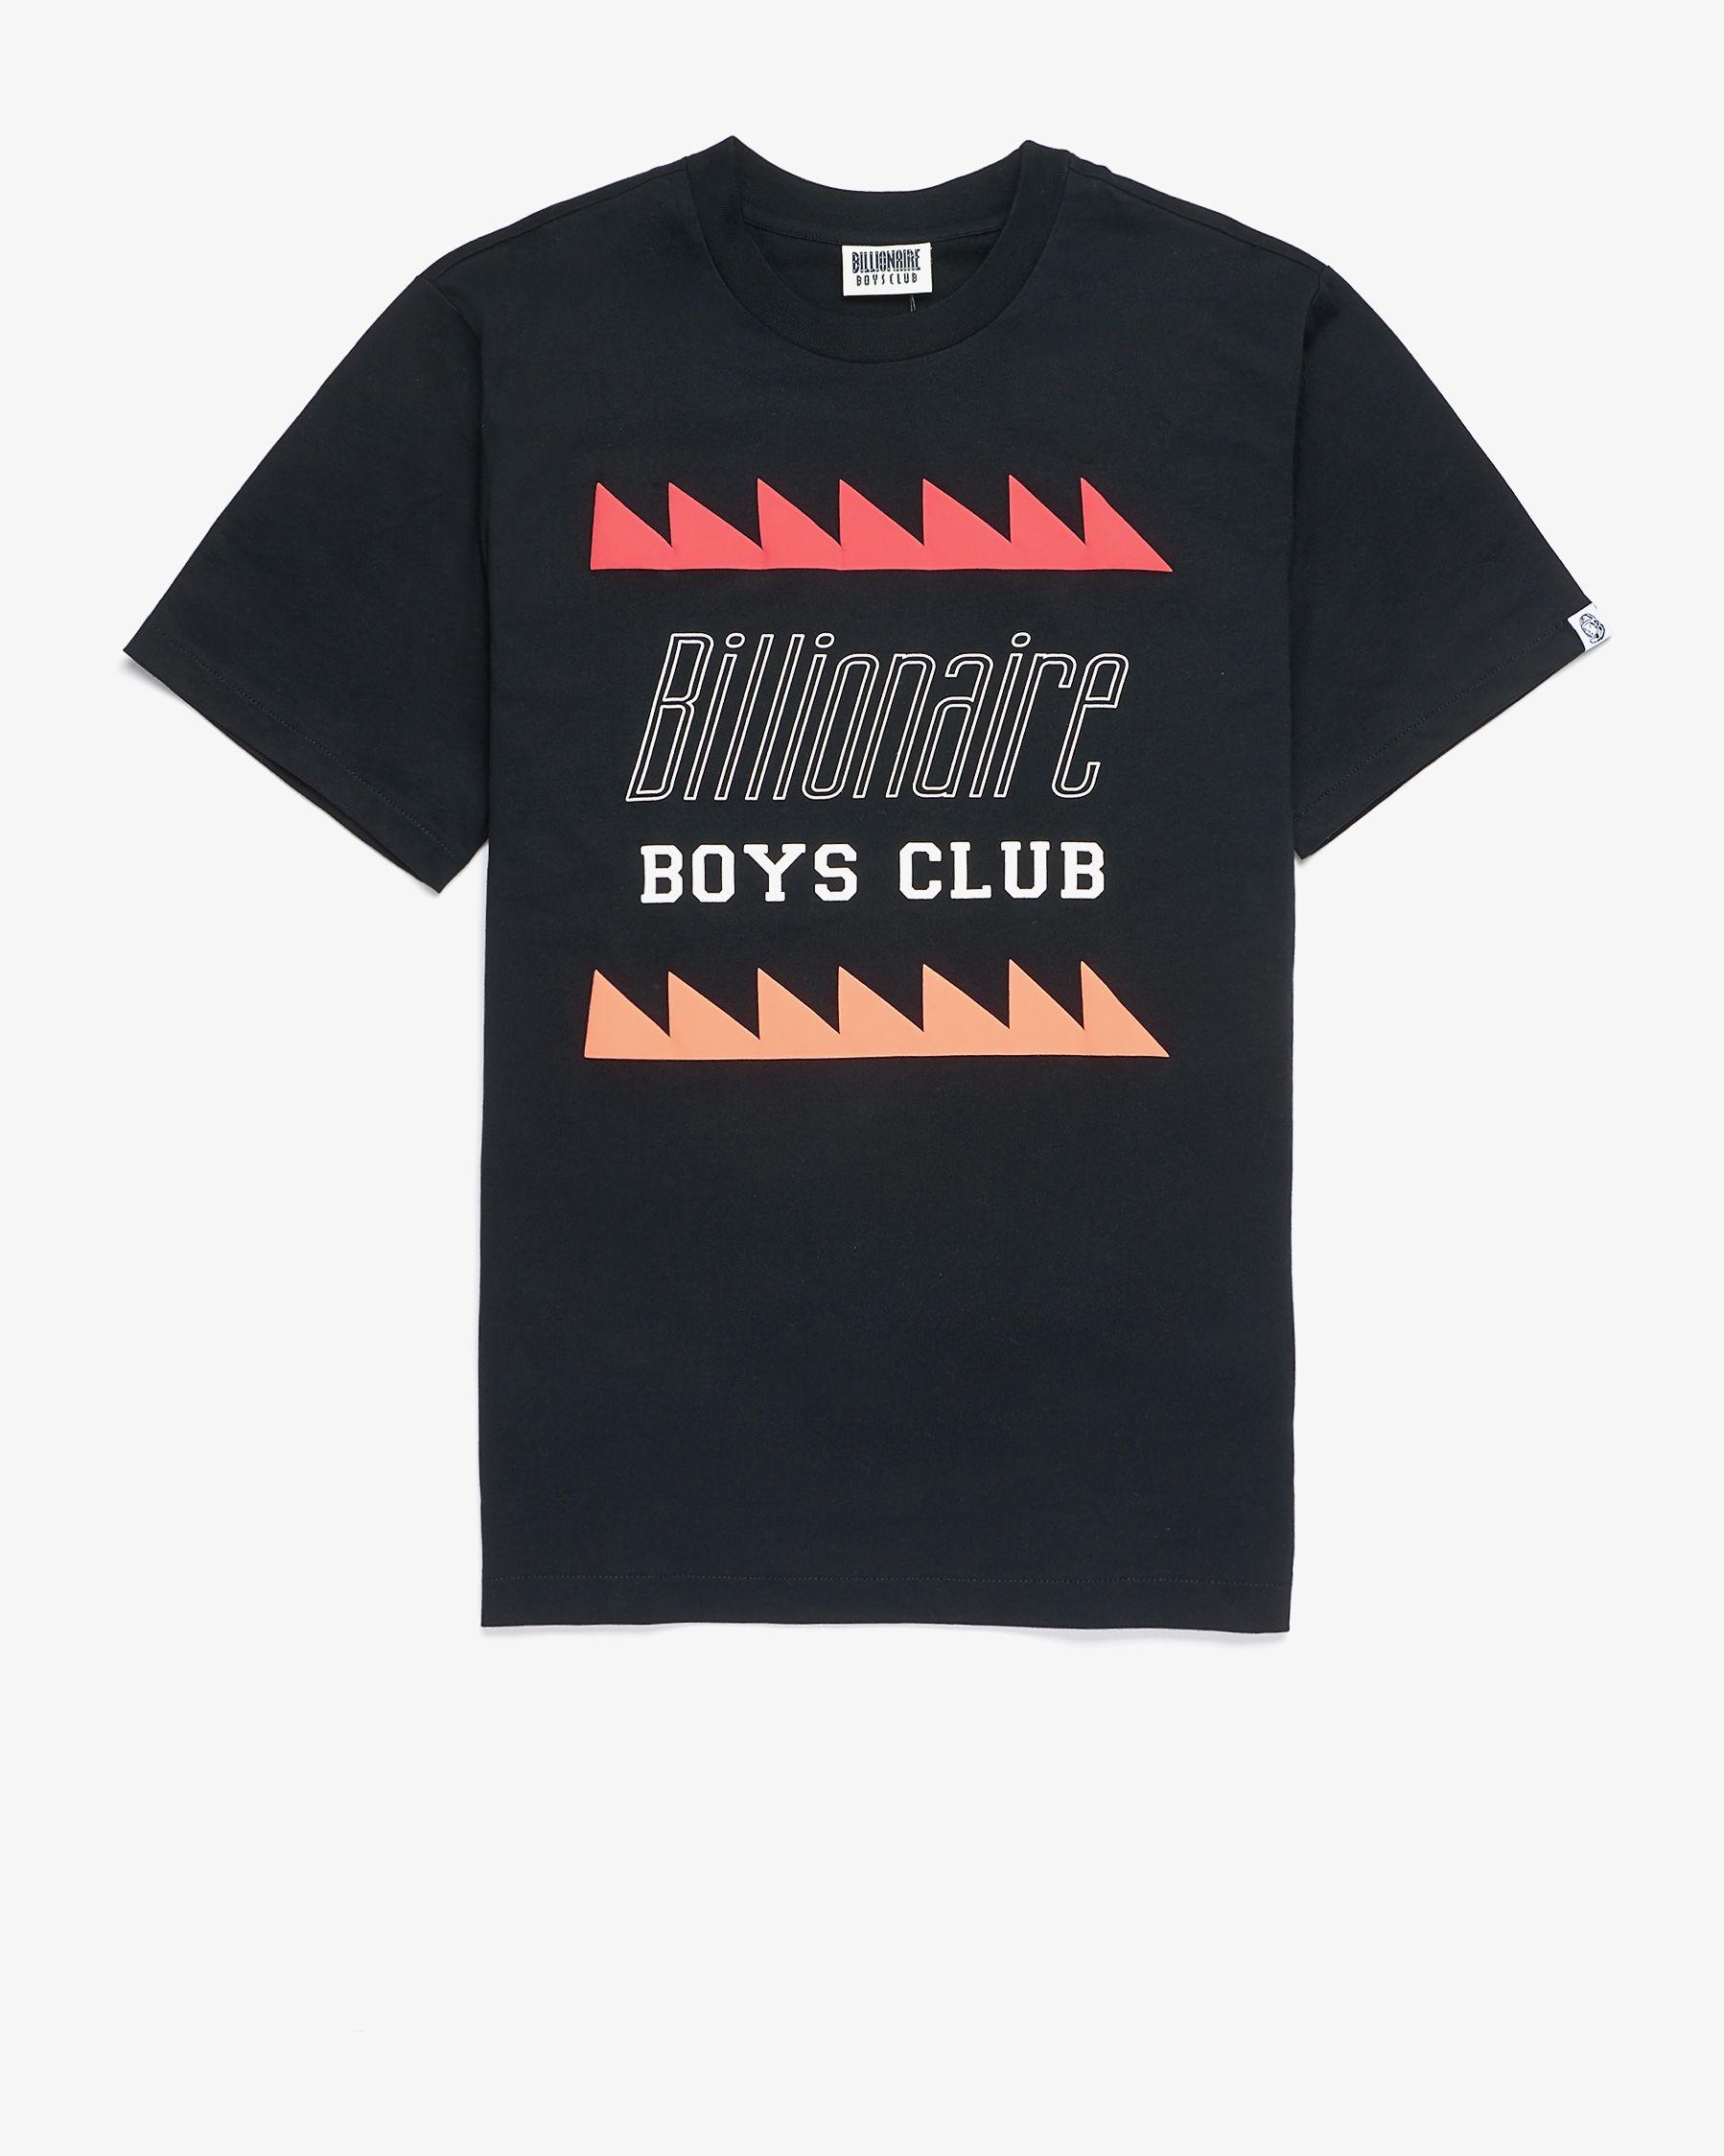 Billonaire Boys Club Logo - Buy Now Billionaire Boys Club Oscillating Logo T Shirt